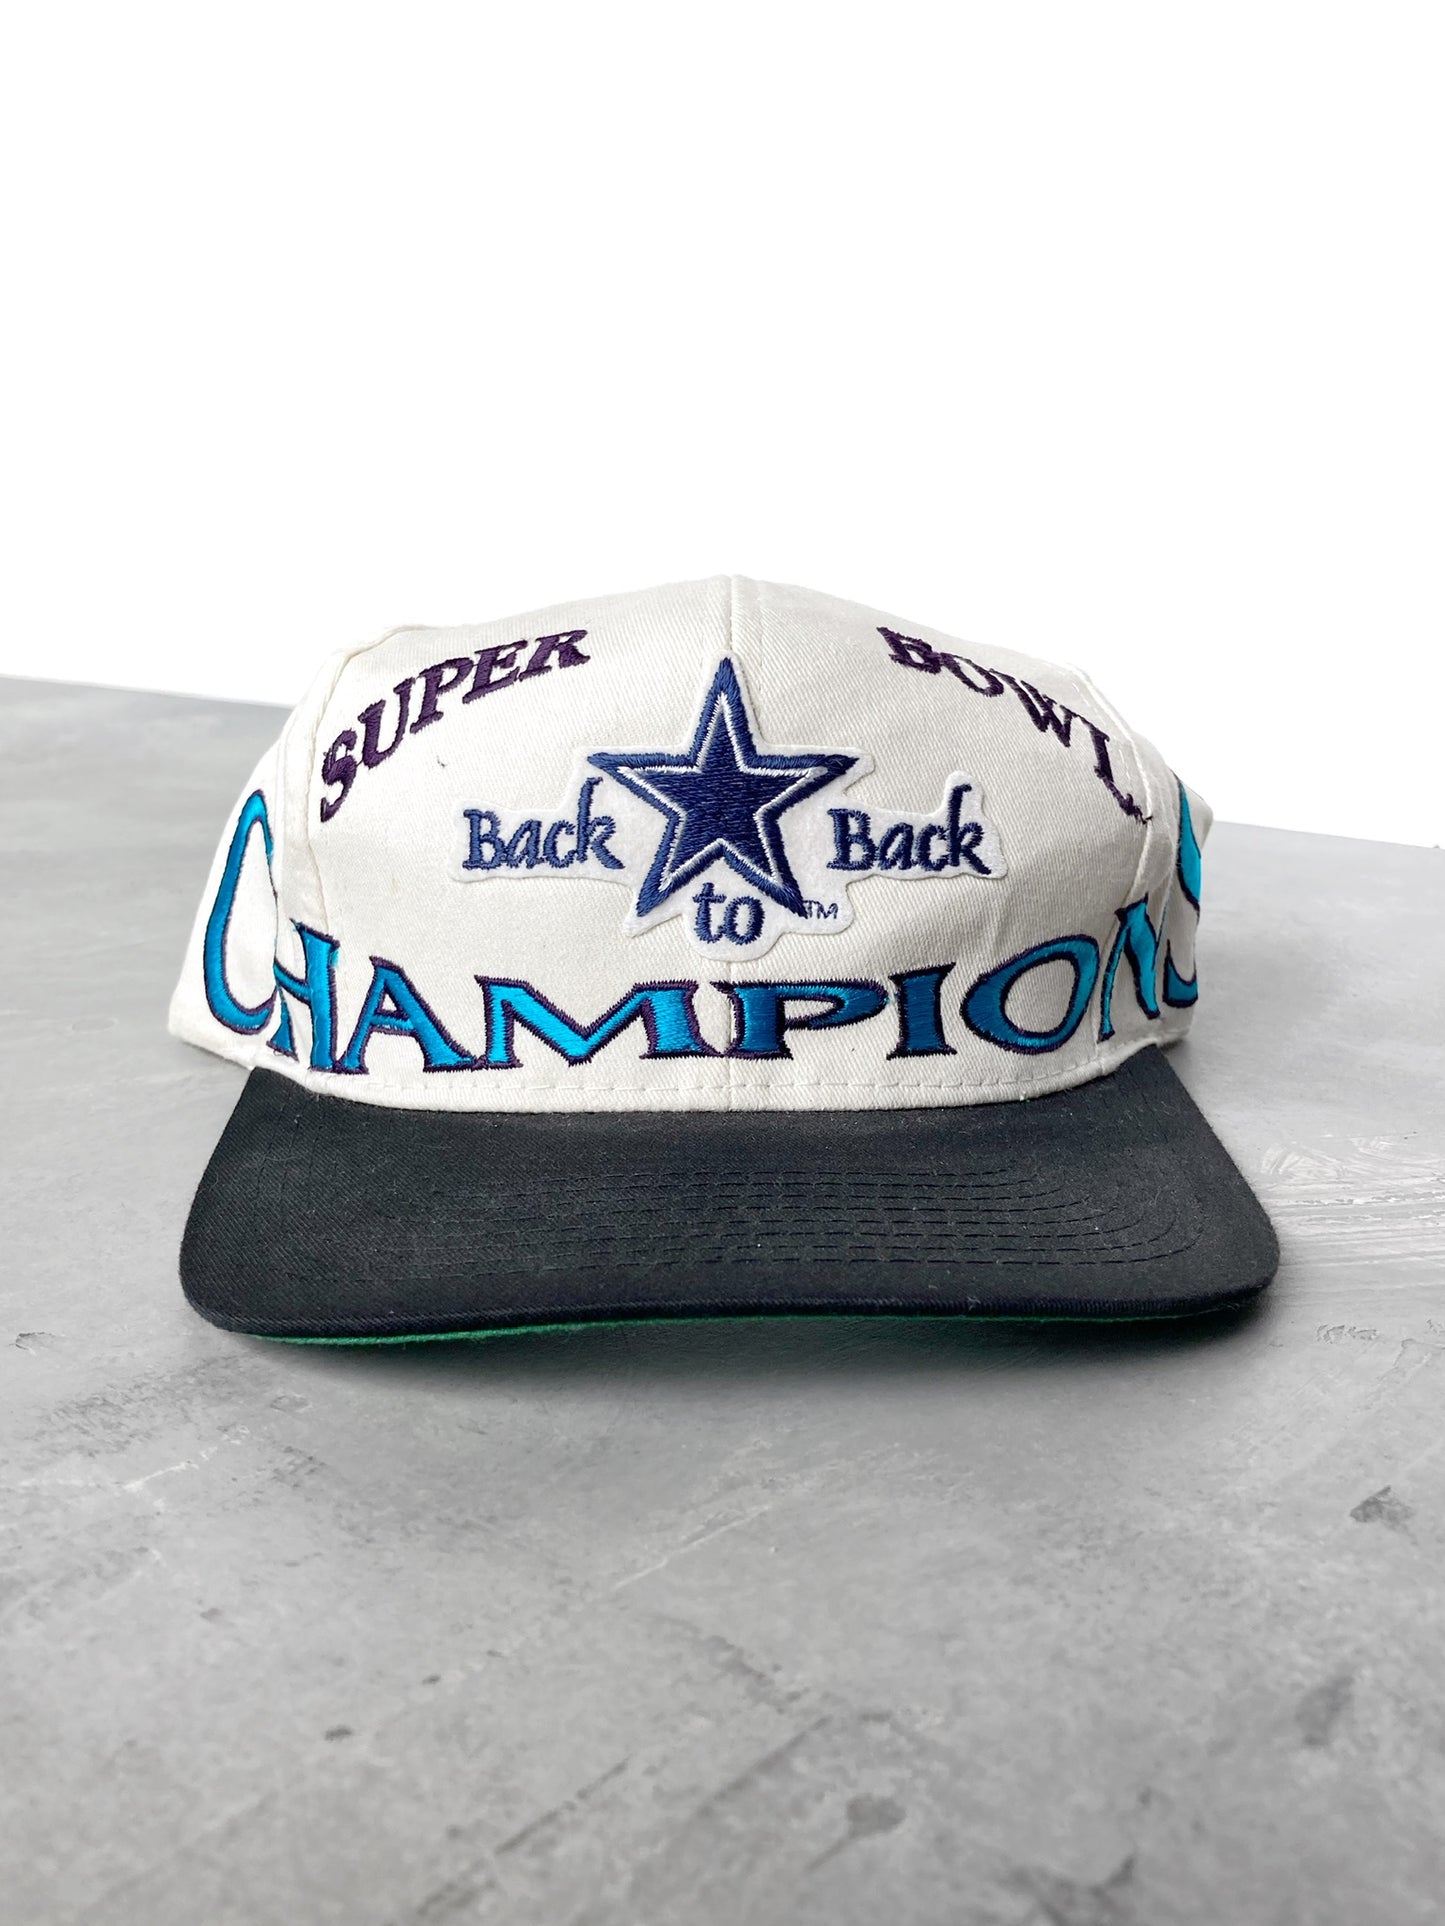 Dallas Cowboys Super Bowl XXVIII Hat